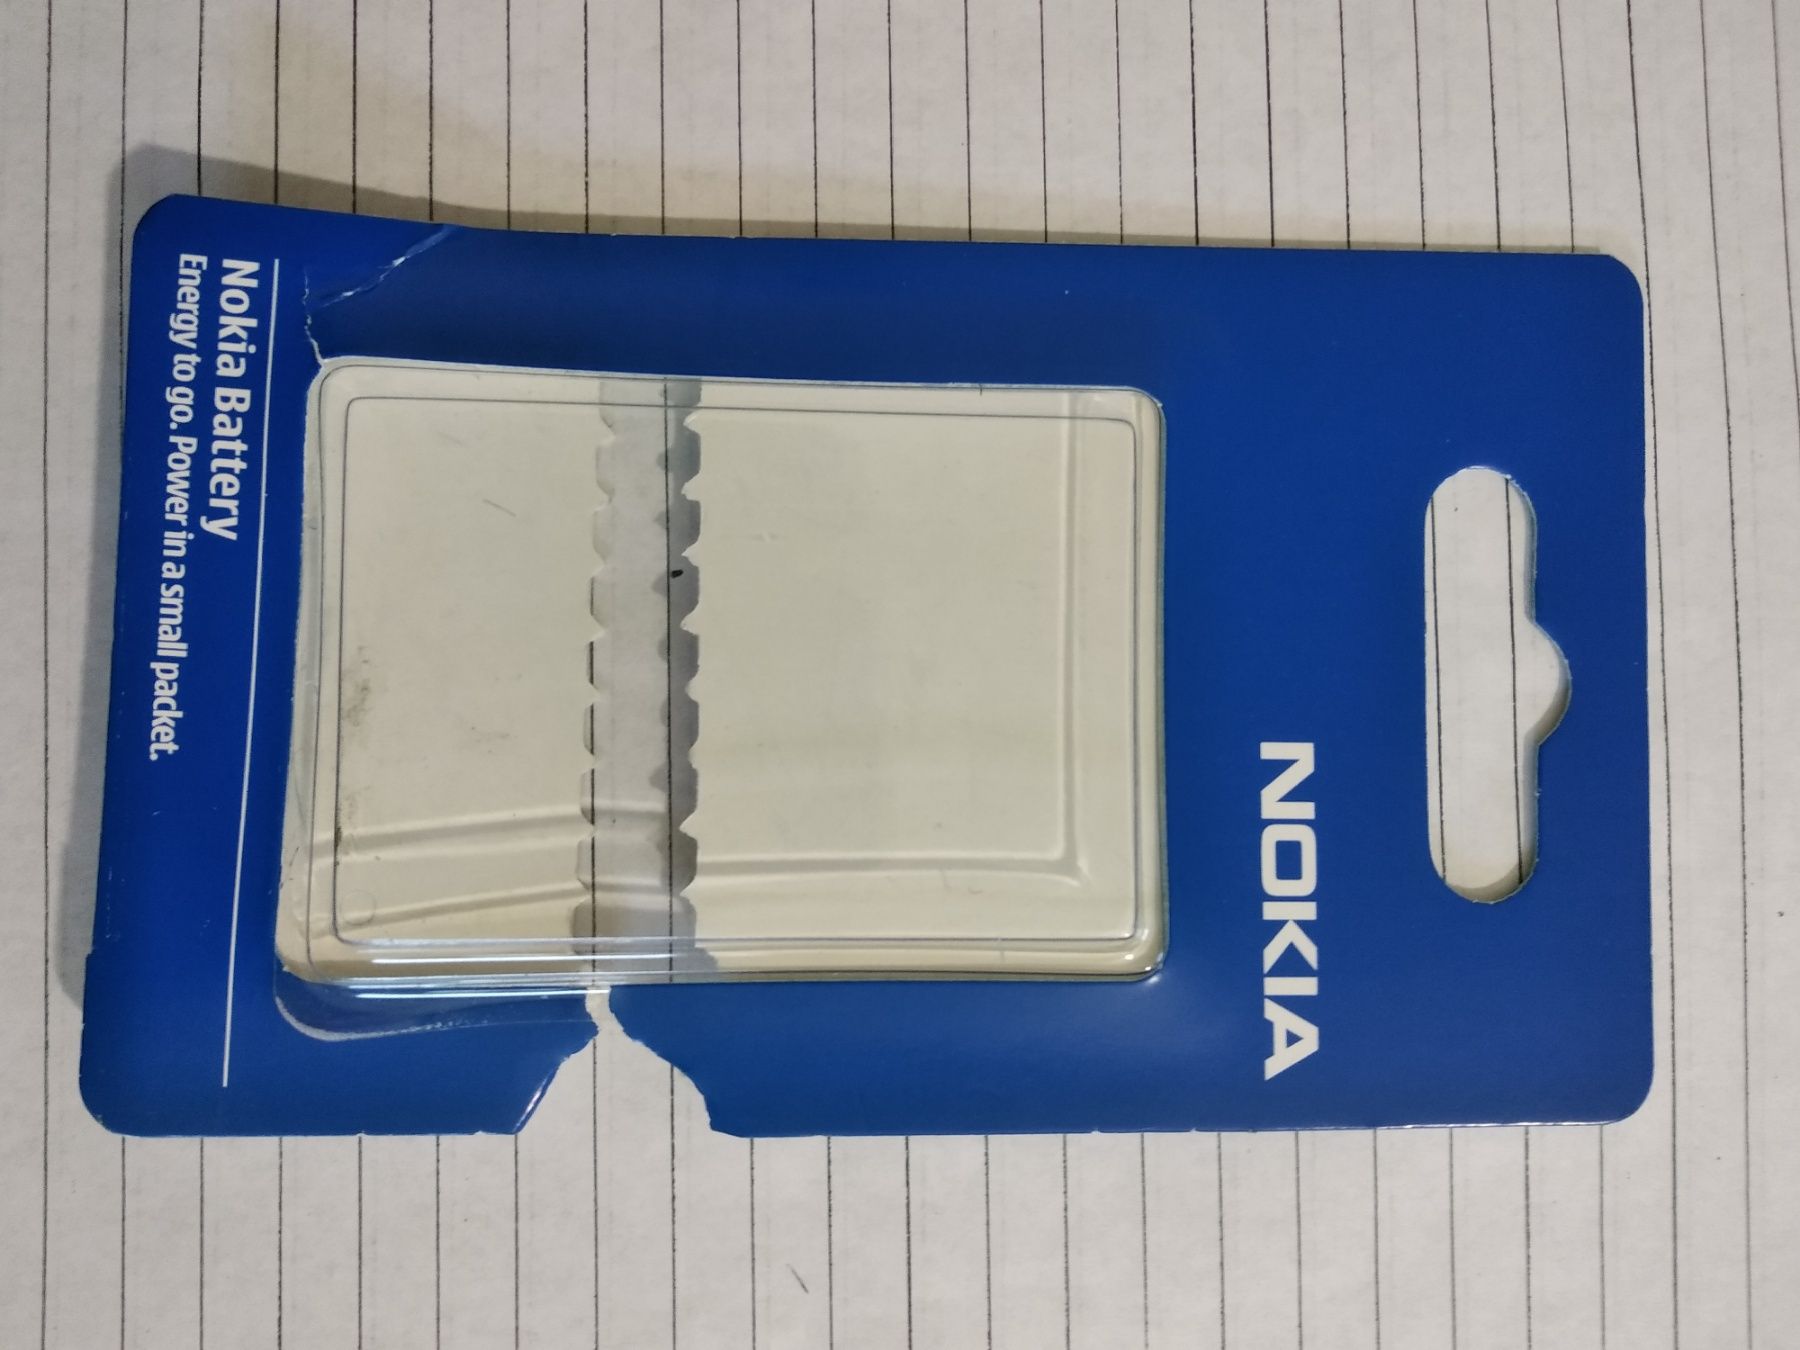 Продам Nokia 3310